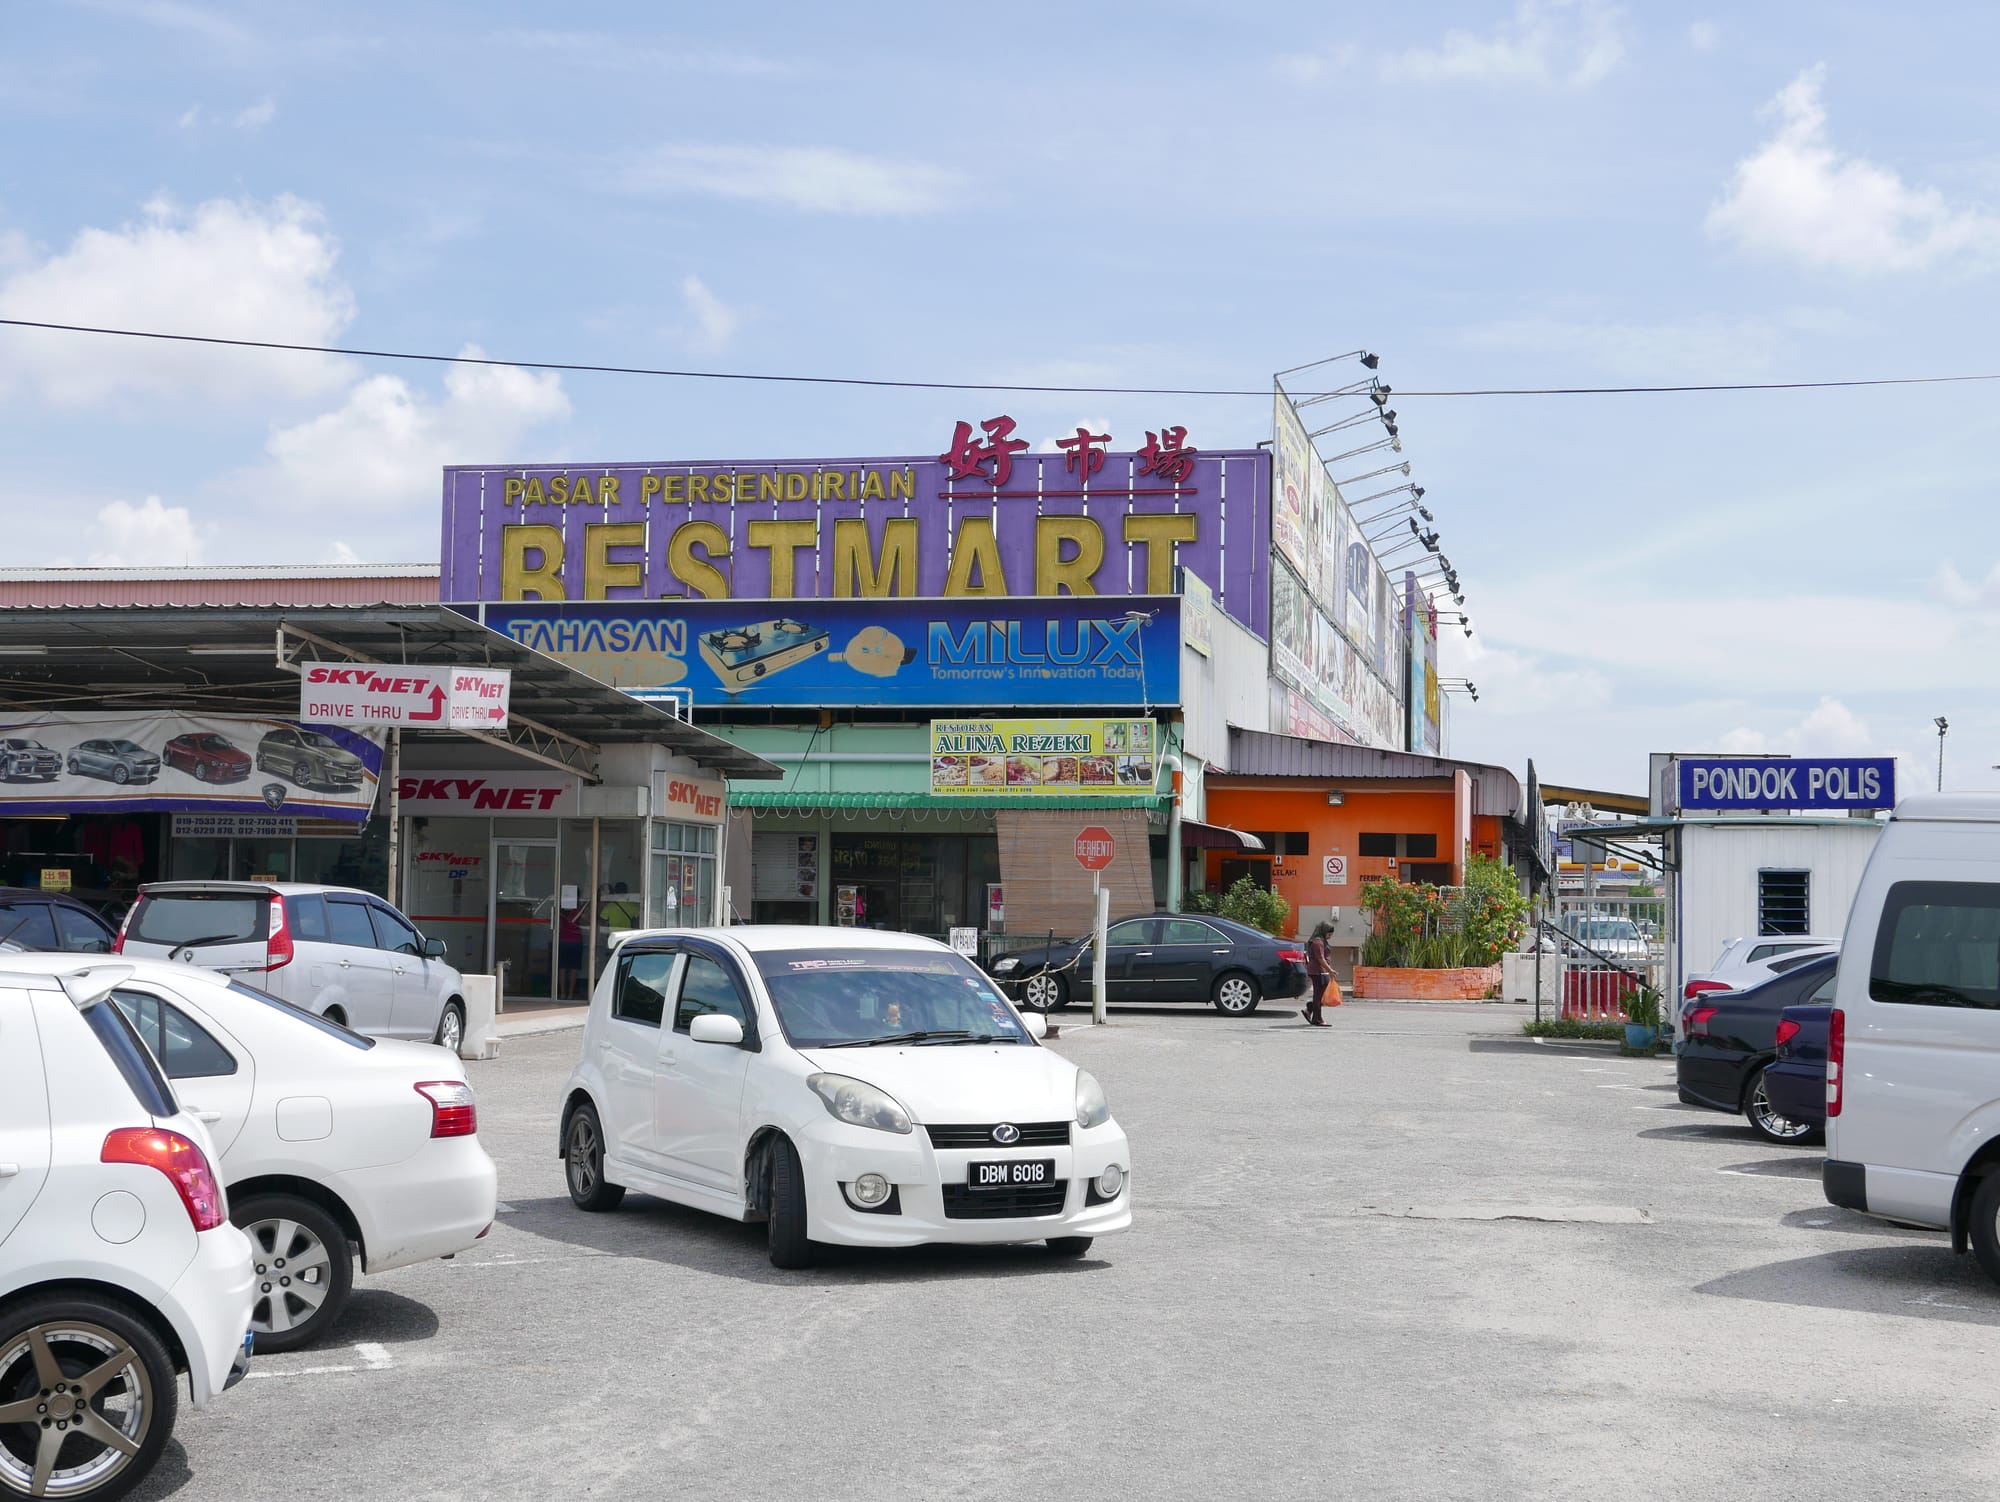 Photo by Author — Bestmart, Johor Bahru